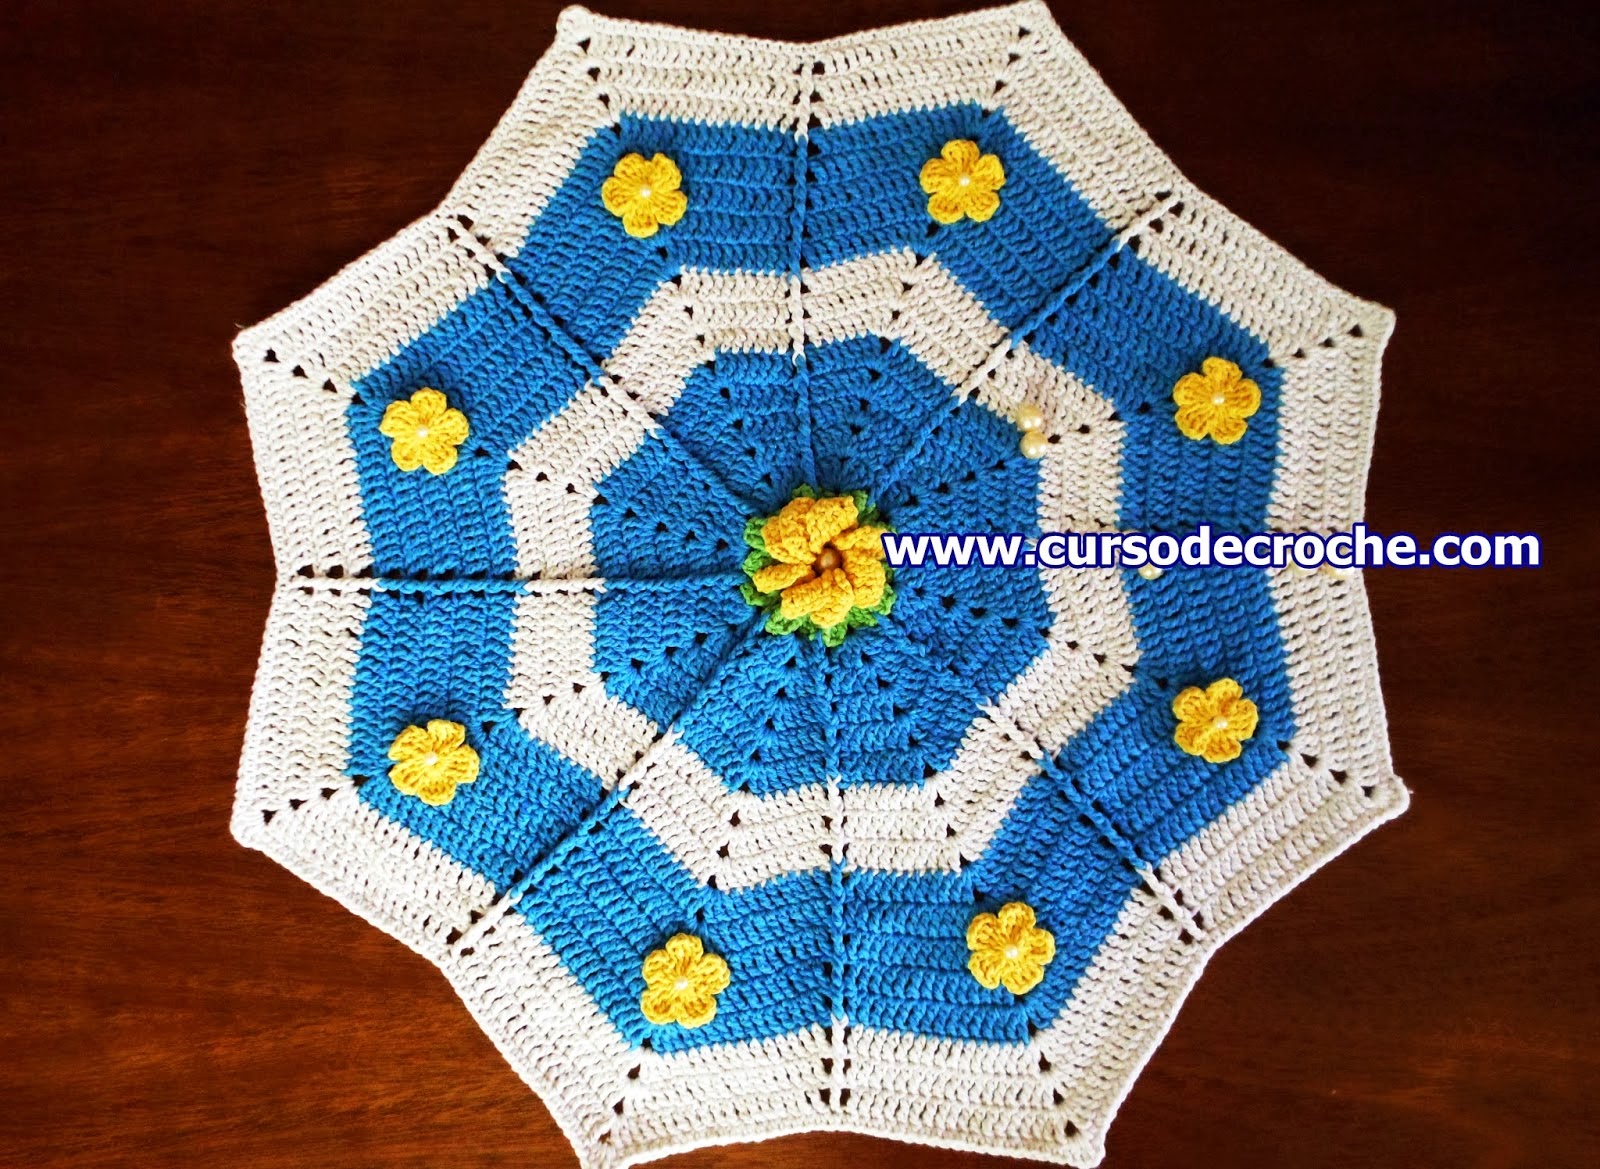 aprender croche tapetes estrela floral branco azul amarelo edinir-croche dvd video aulas loja curso de croche frete gratis